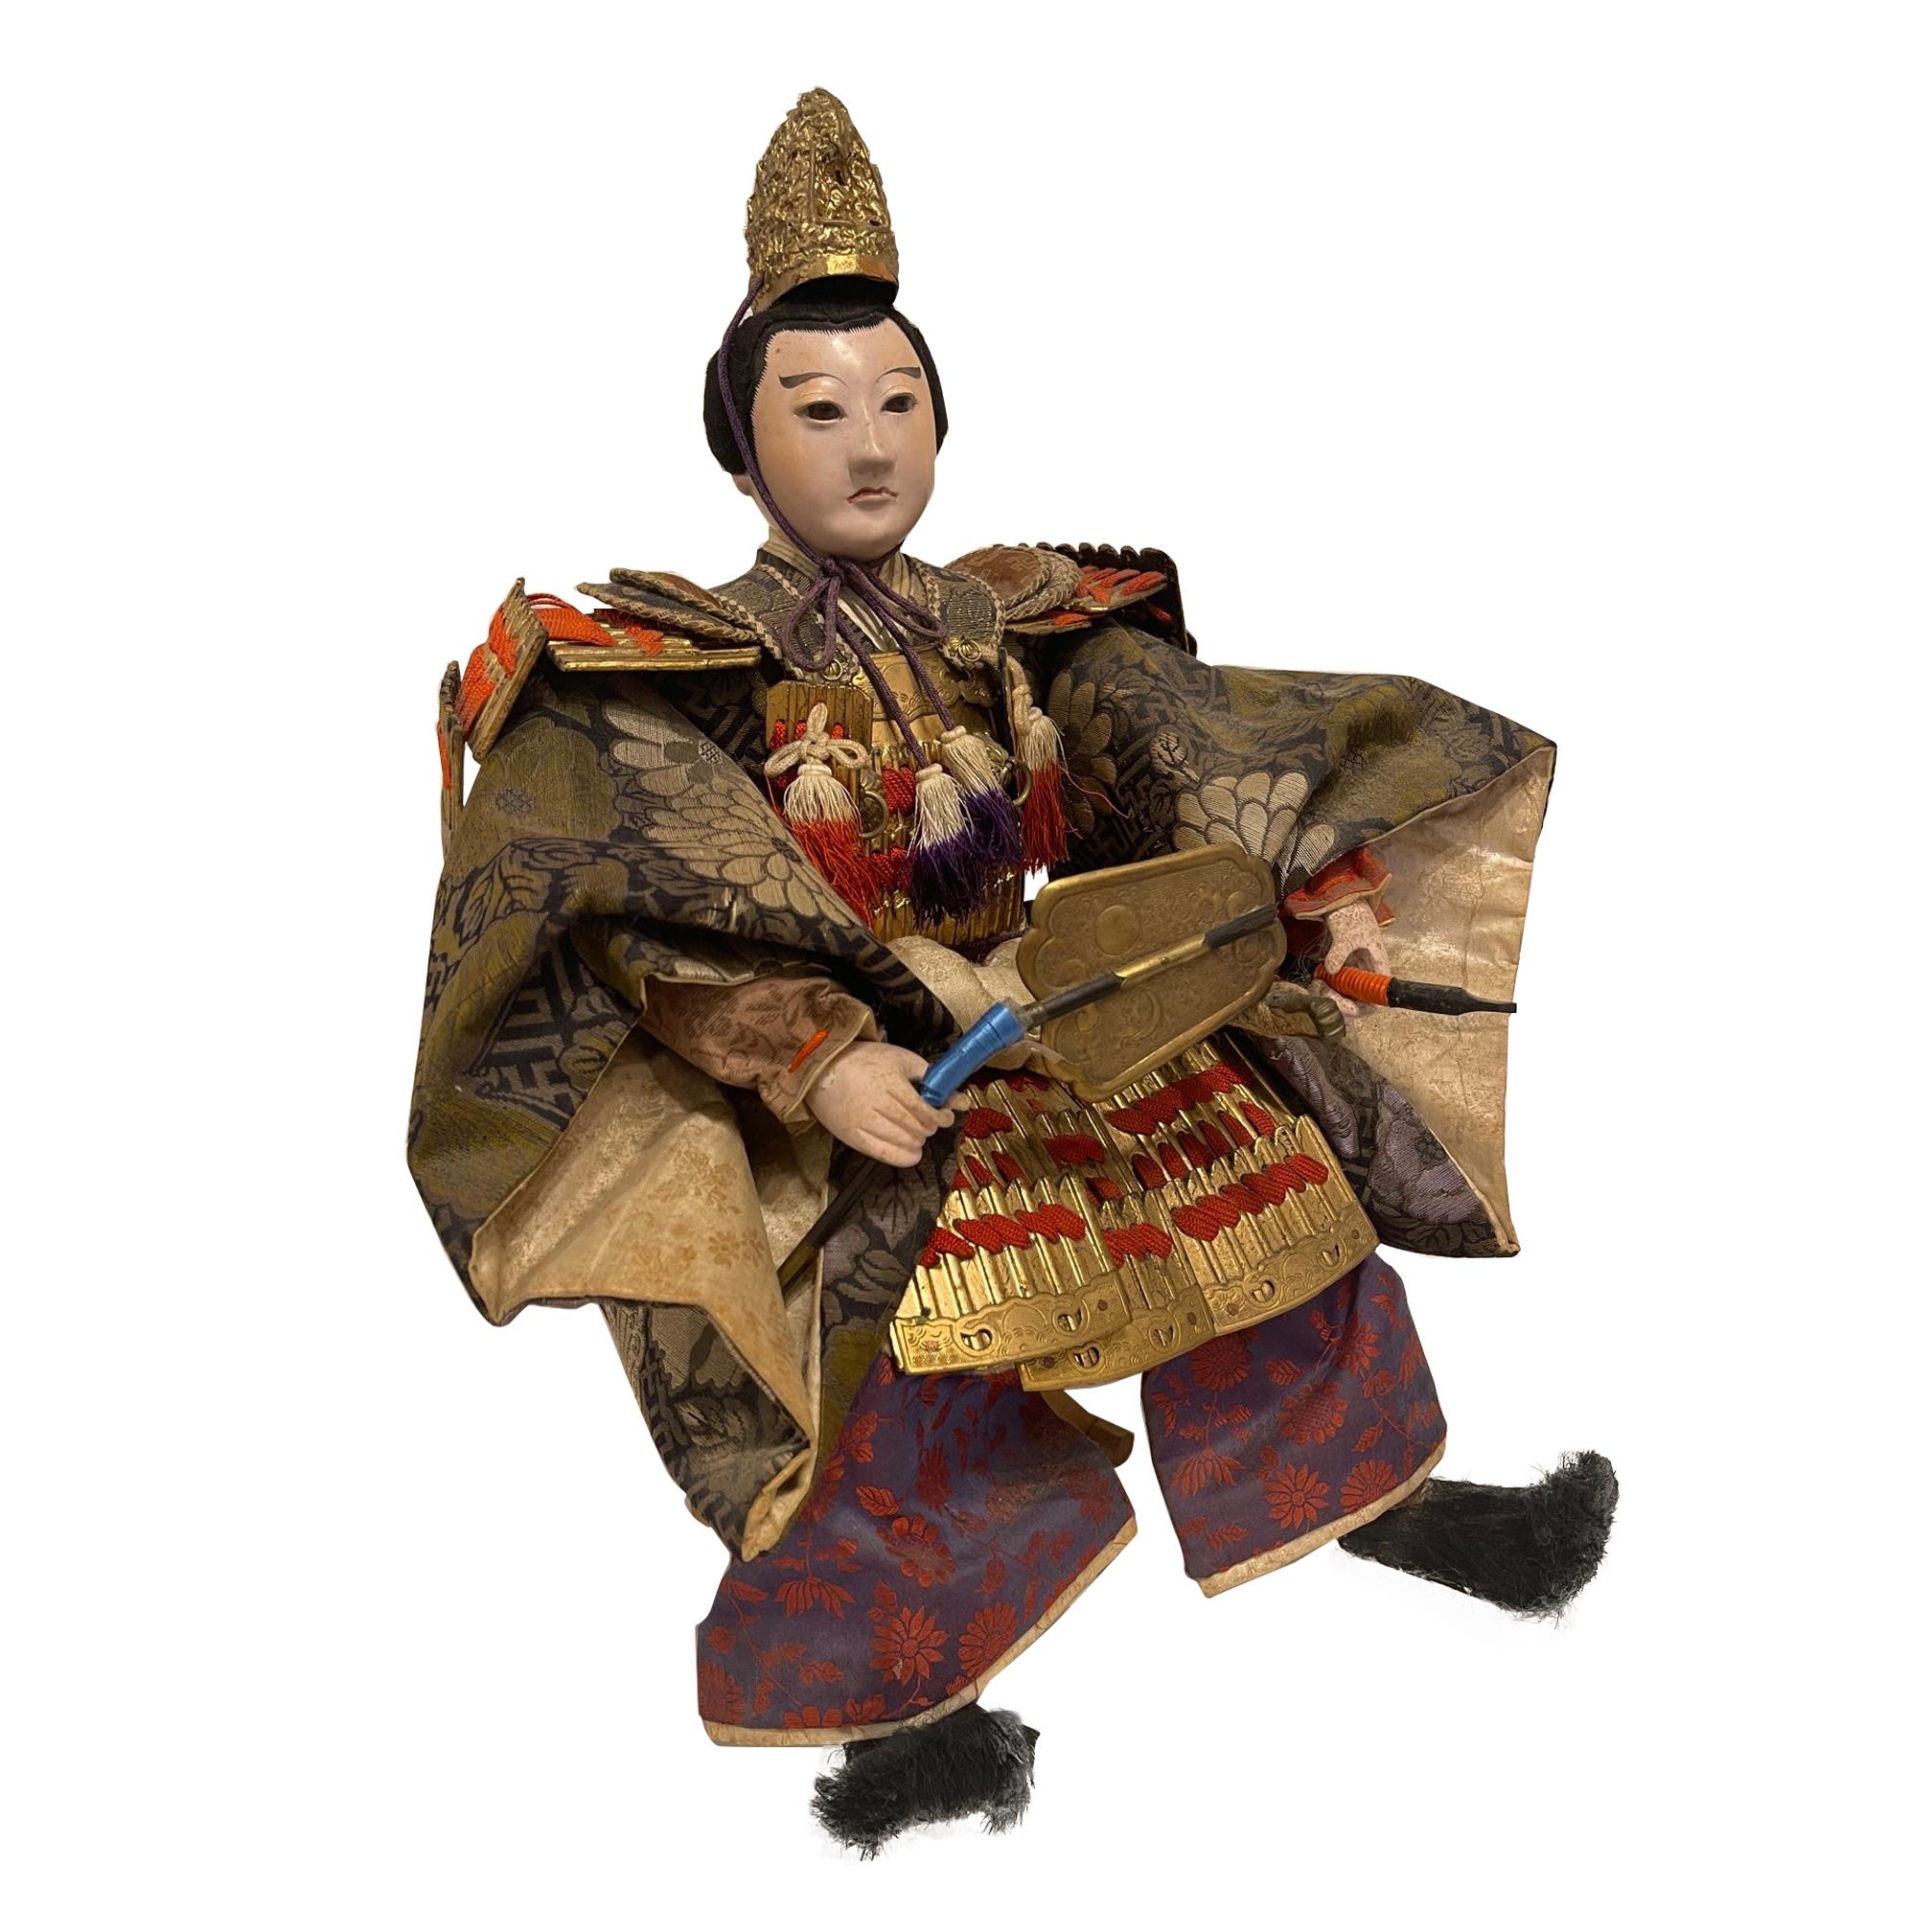 Japanische Samurai-Puppe oder -Figur, Meiji-Periode, um 1830